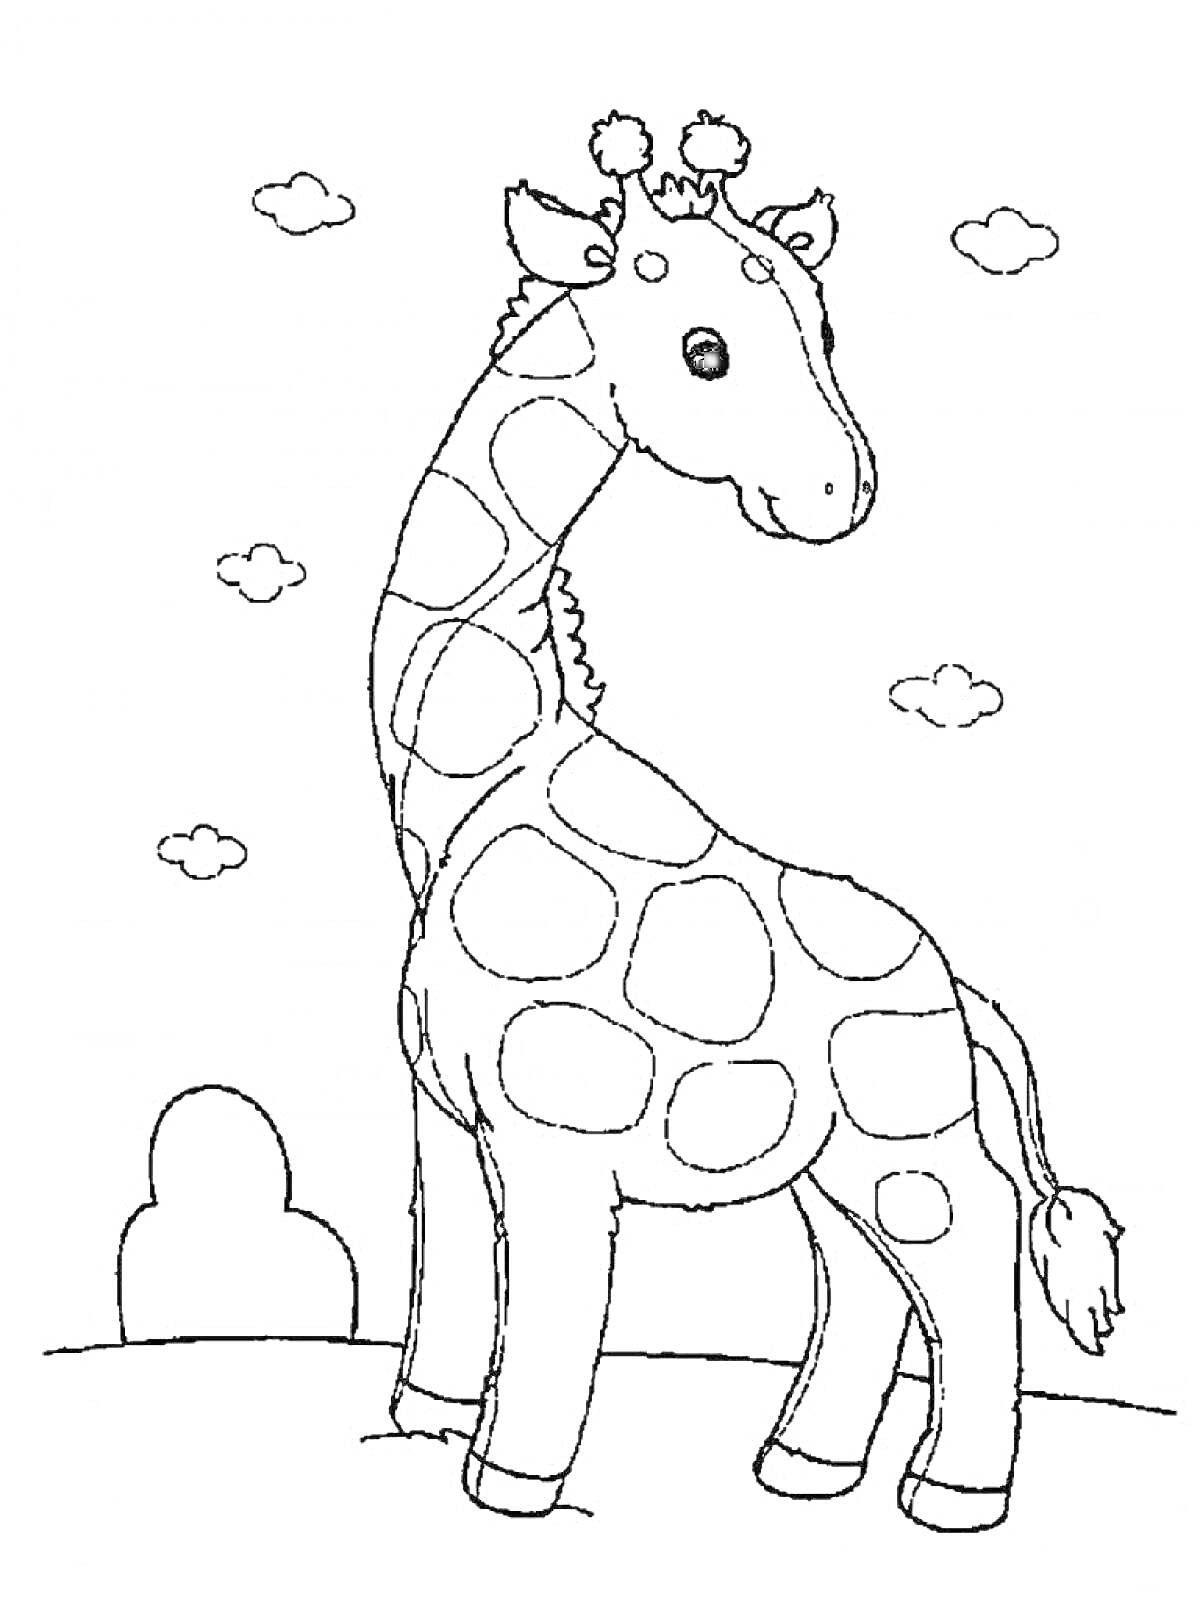 Раскраска Жираф на лужайке с облаками